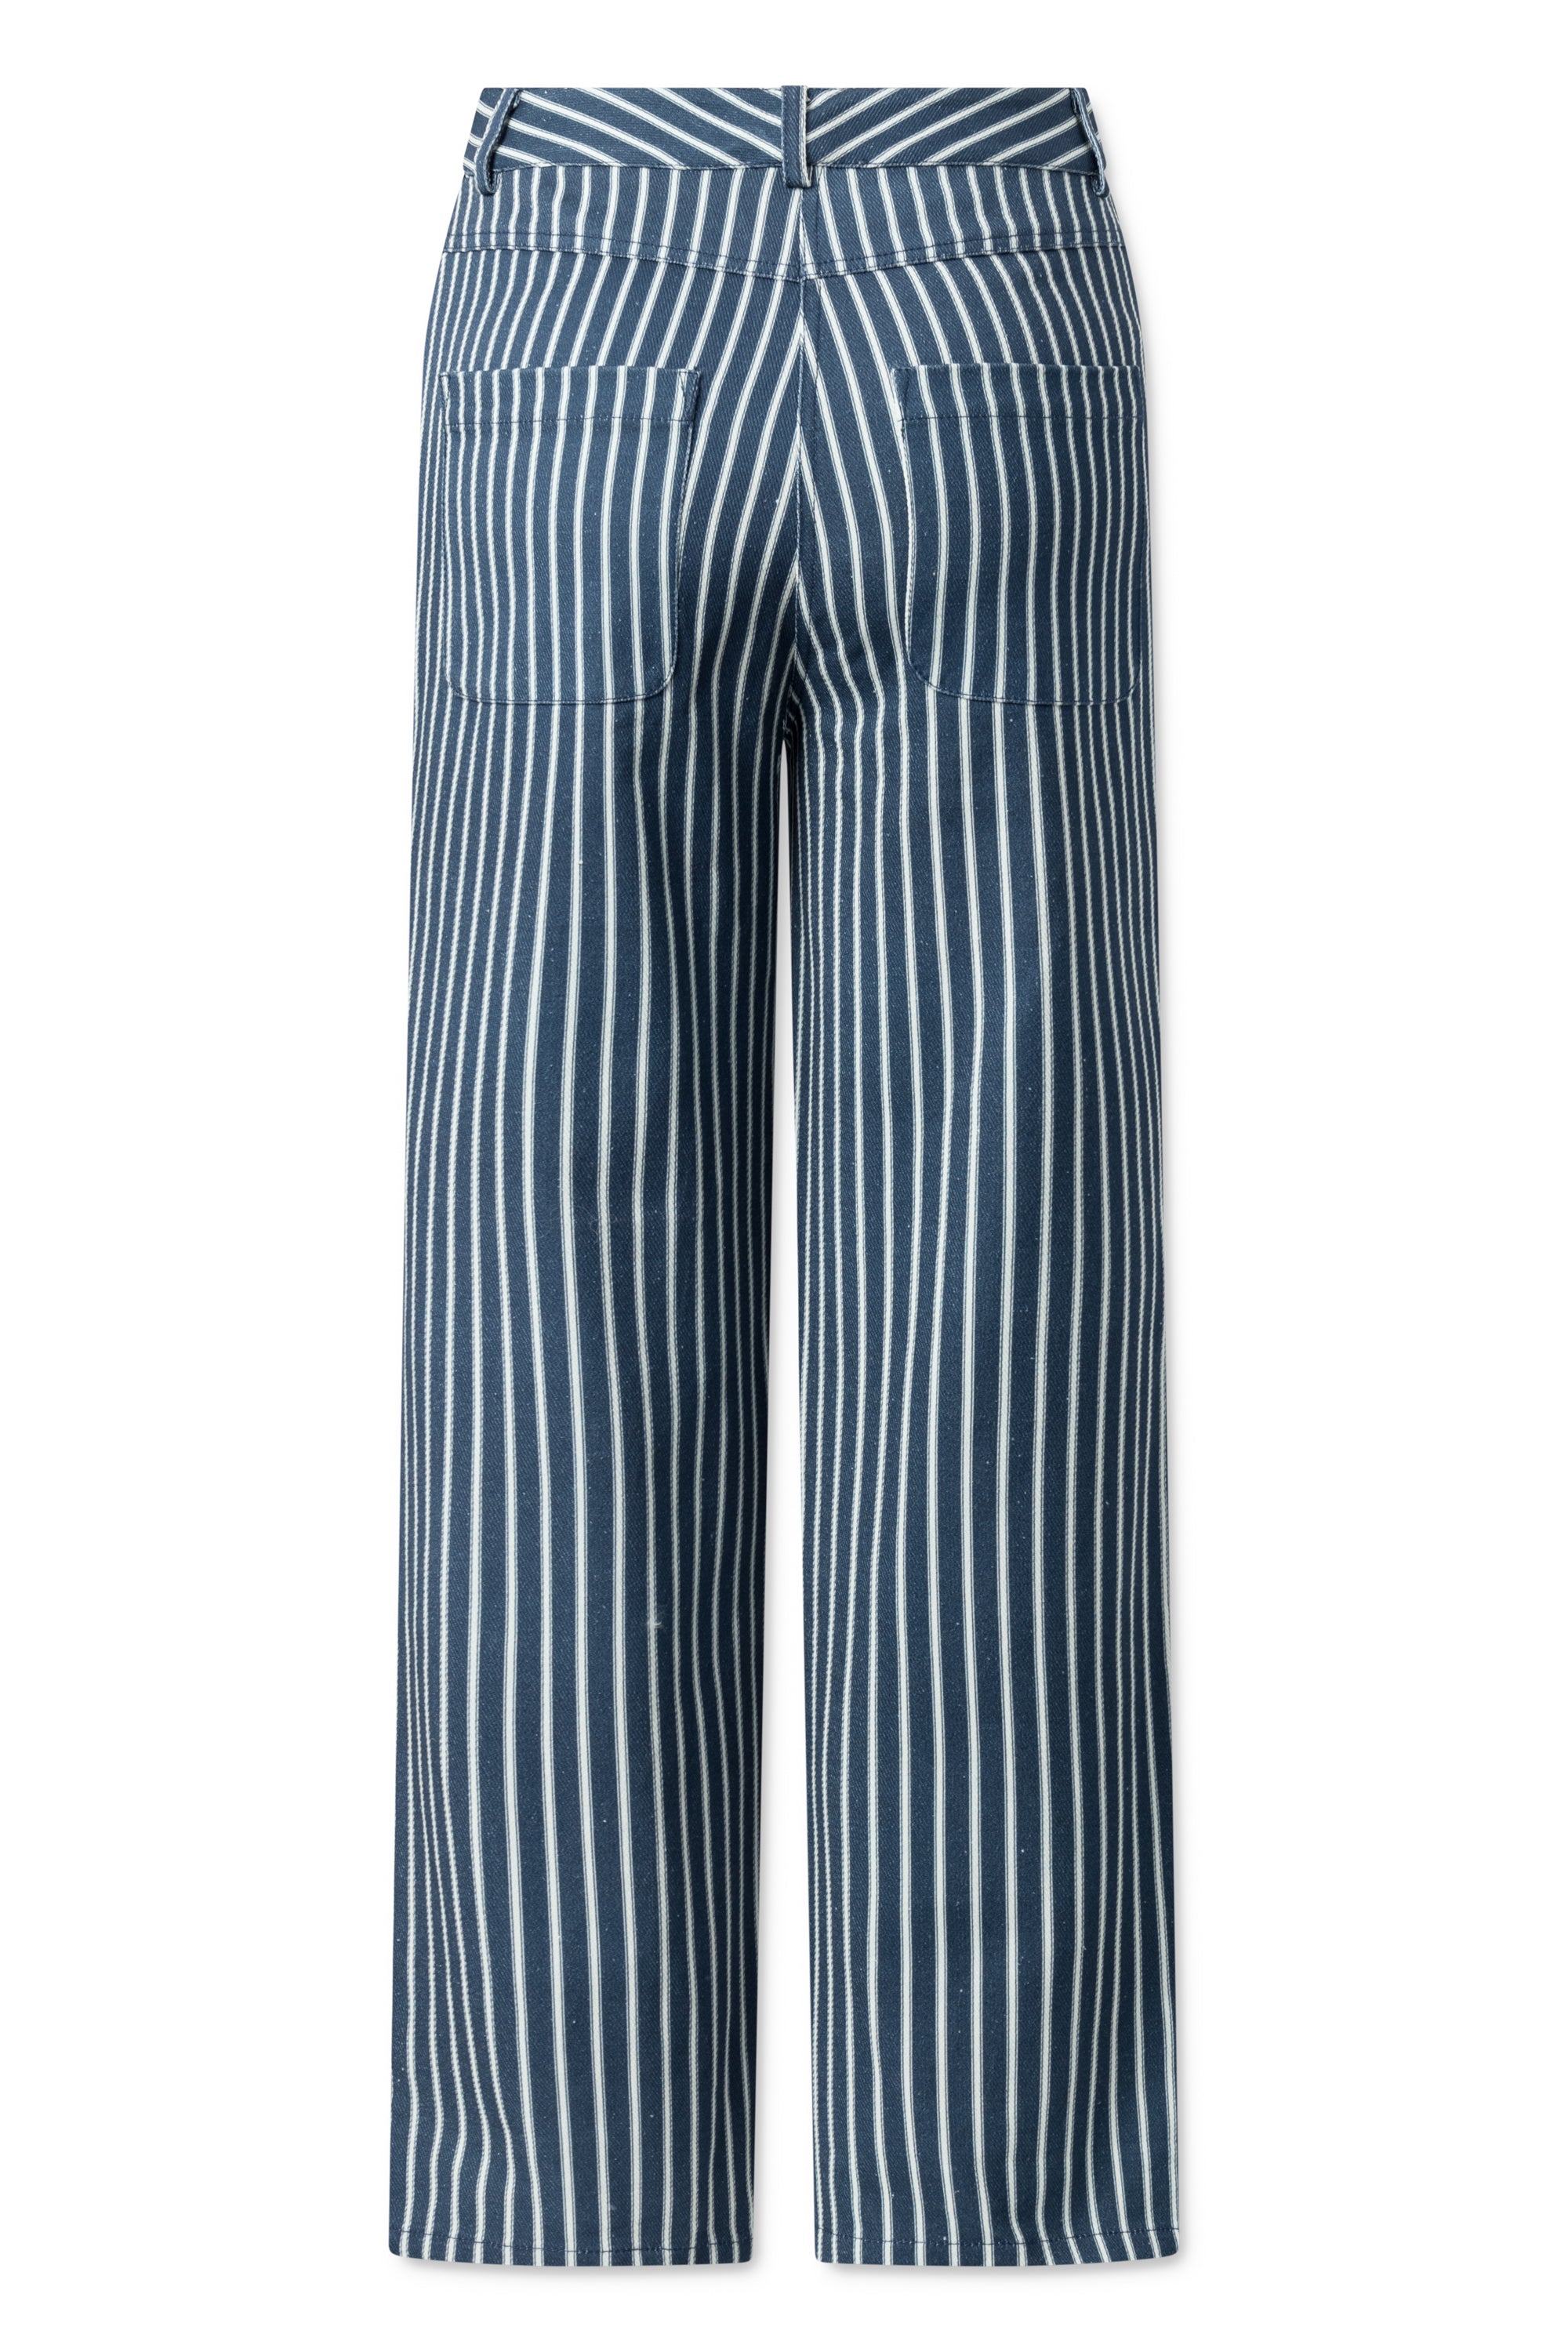 nué notes Logan Pants - Dark Blue Stripe PANTS 495 DARK BLUE STRIPE